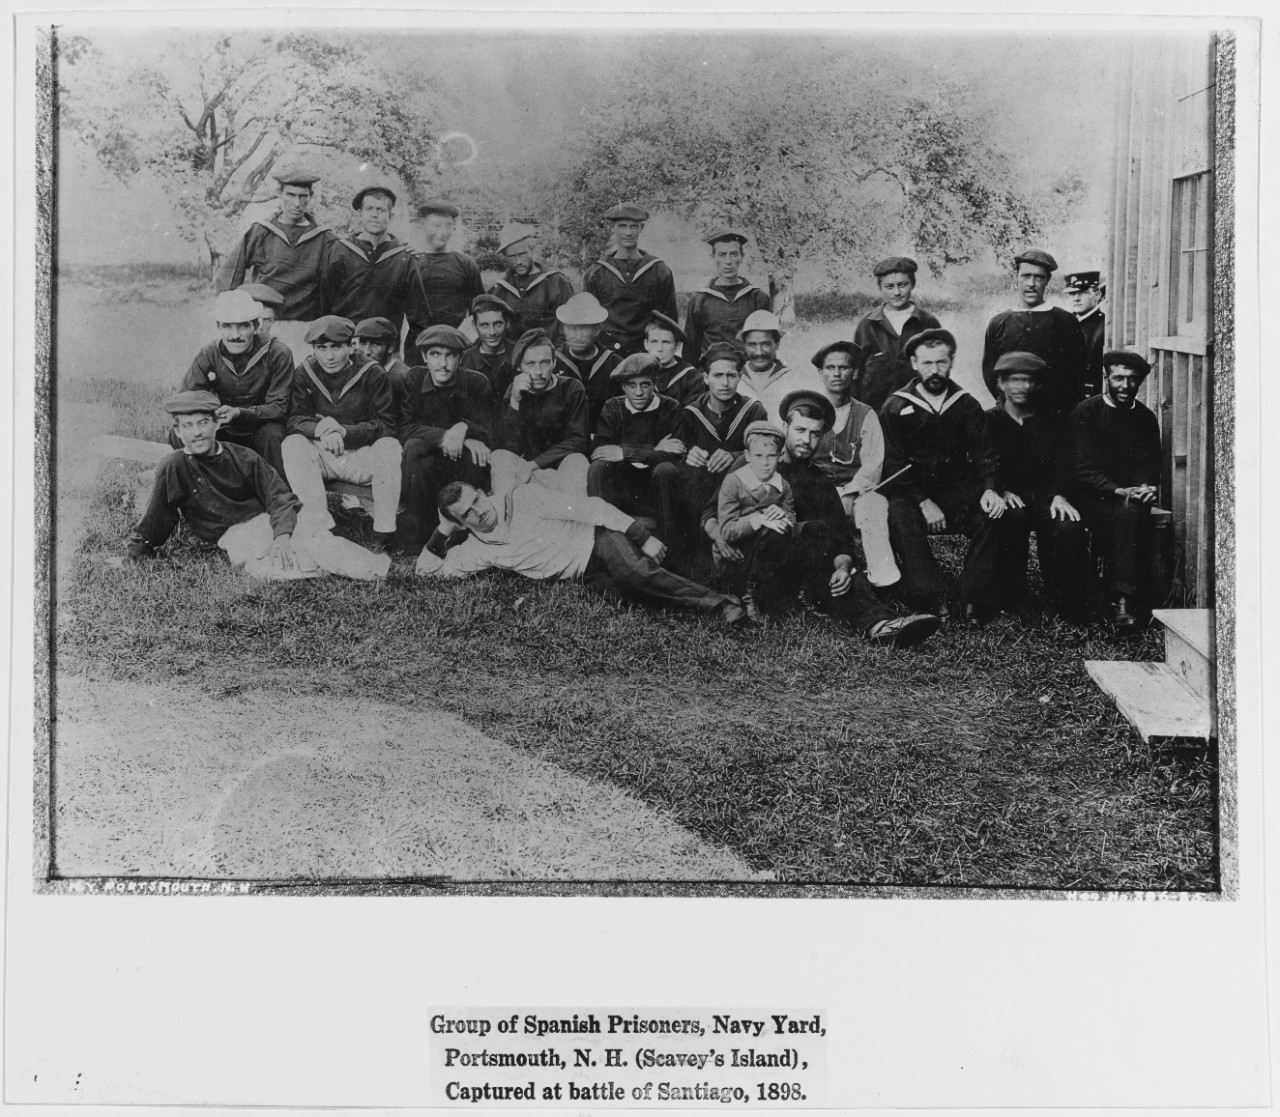 Spanish prisoners captured at the Battle of Santiago, 1898